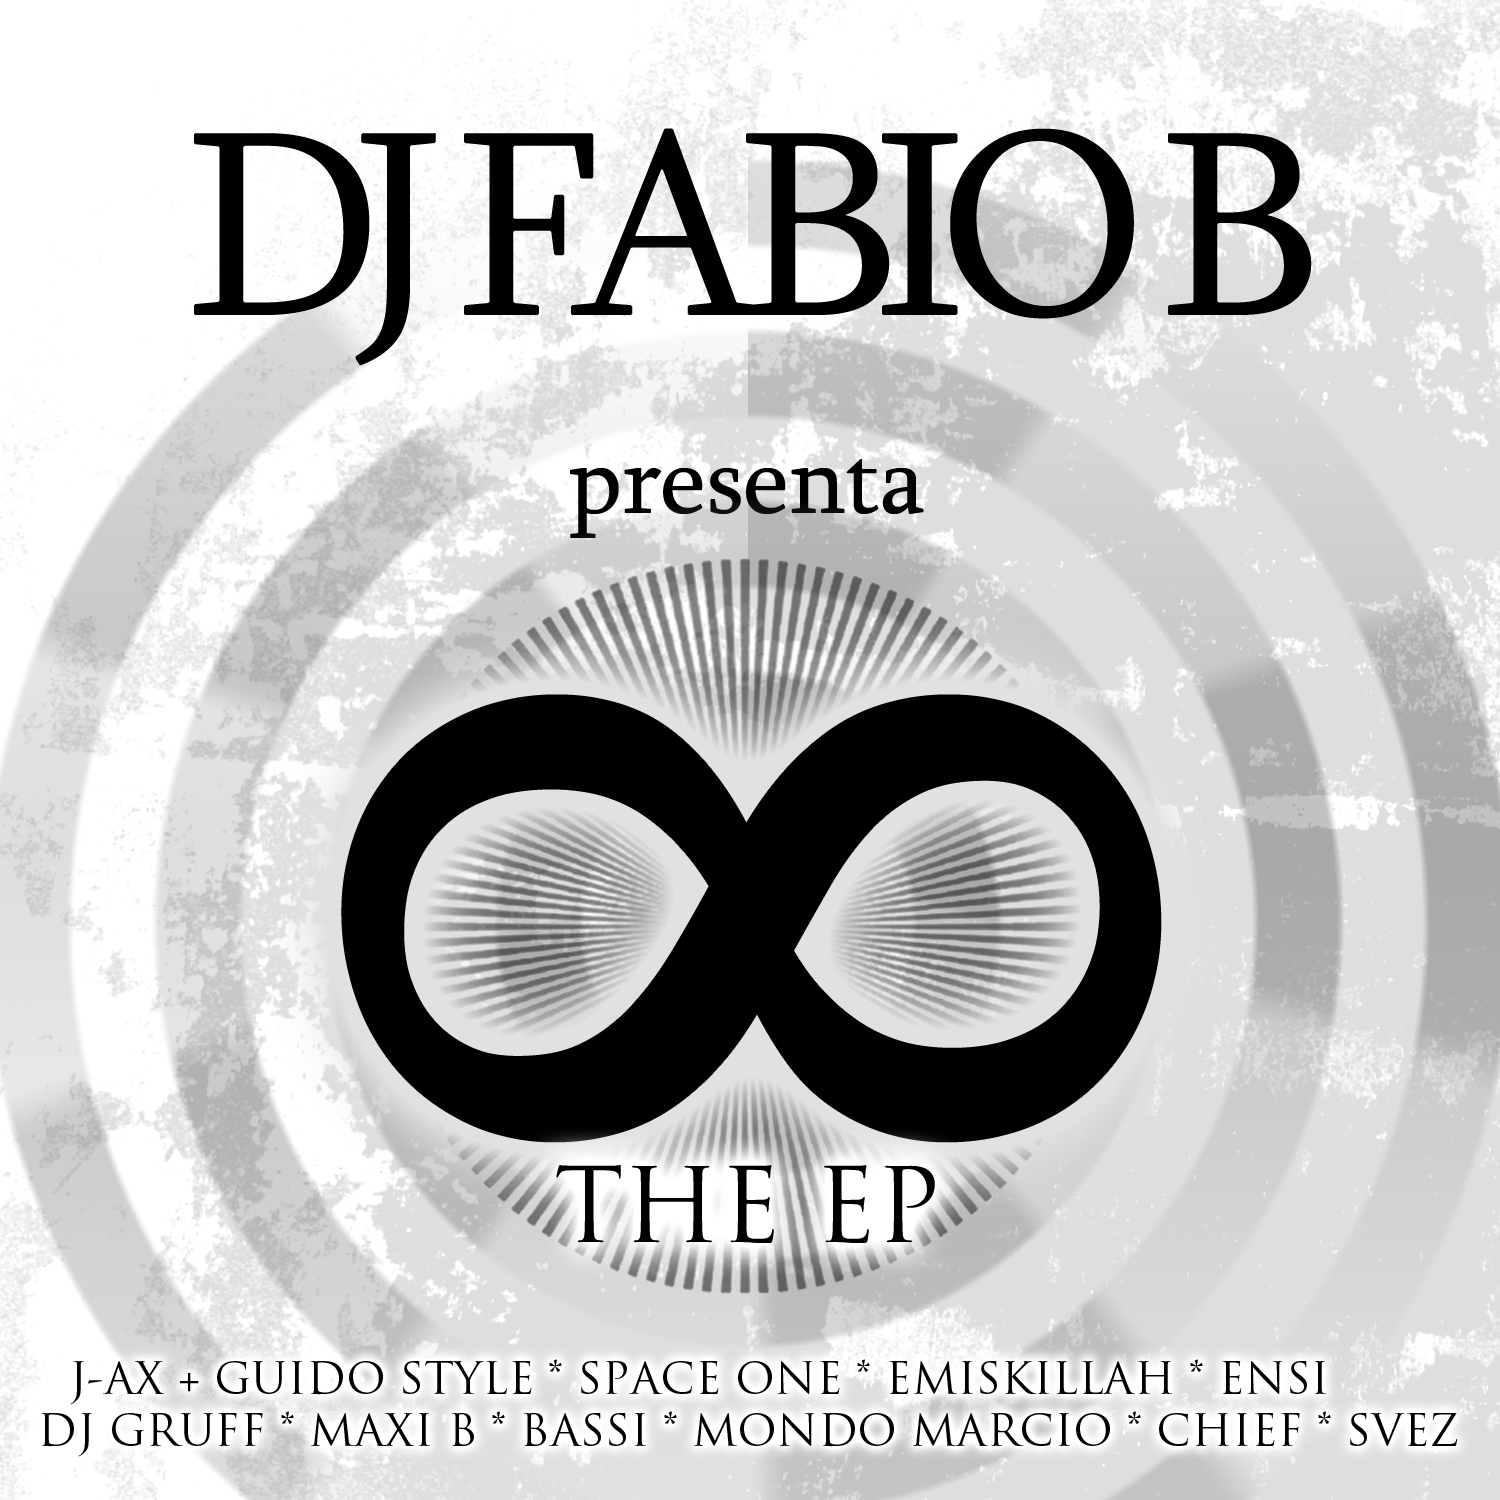 dj-fabio-b-the-ep